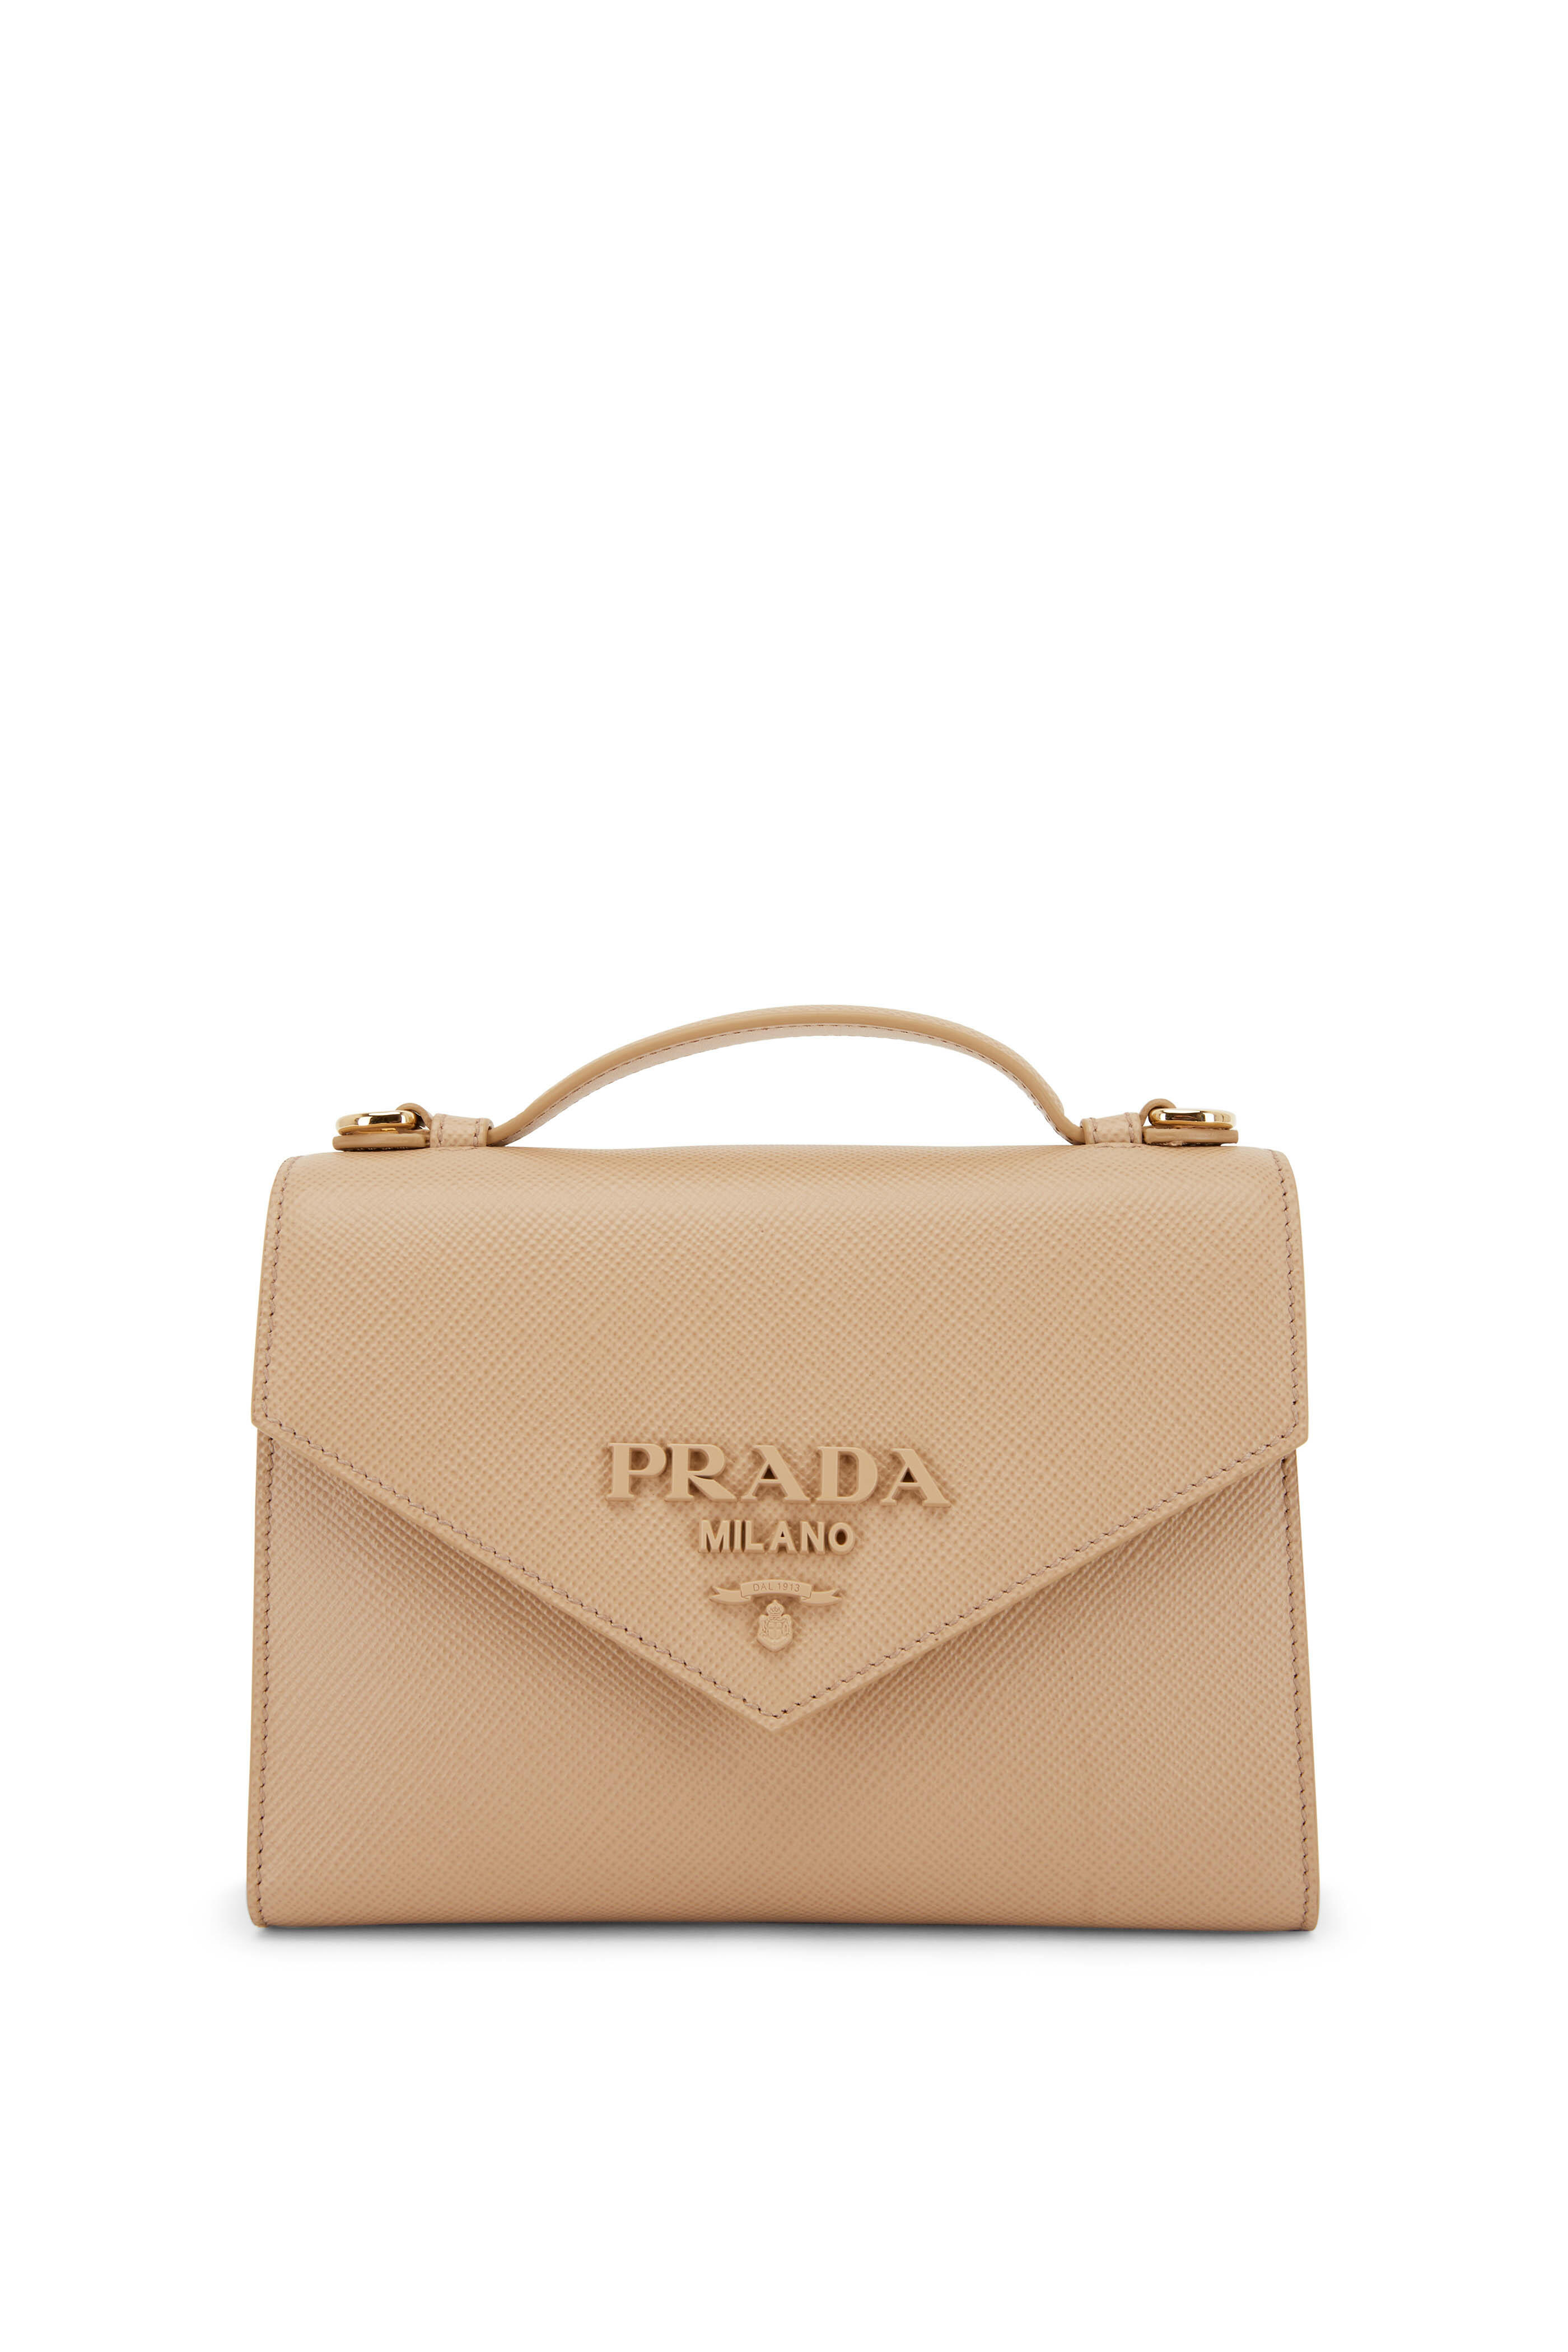 Prada - Women's Saffiano Shoulder Bag - Brown - Leather